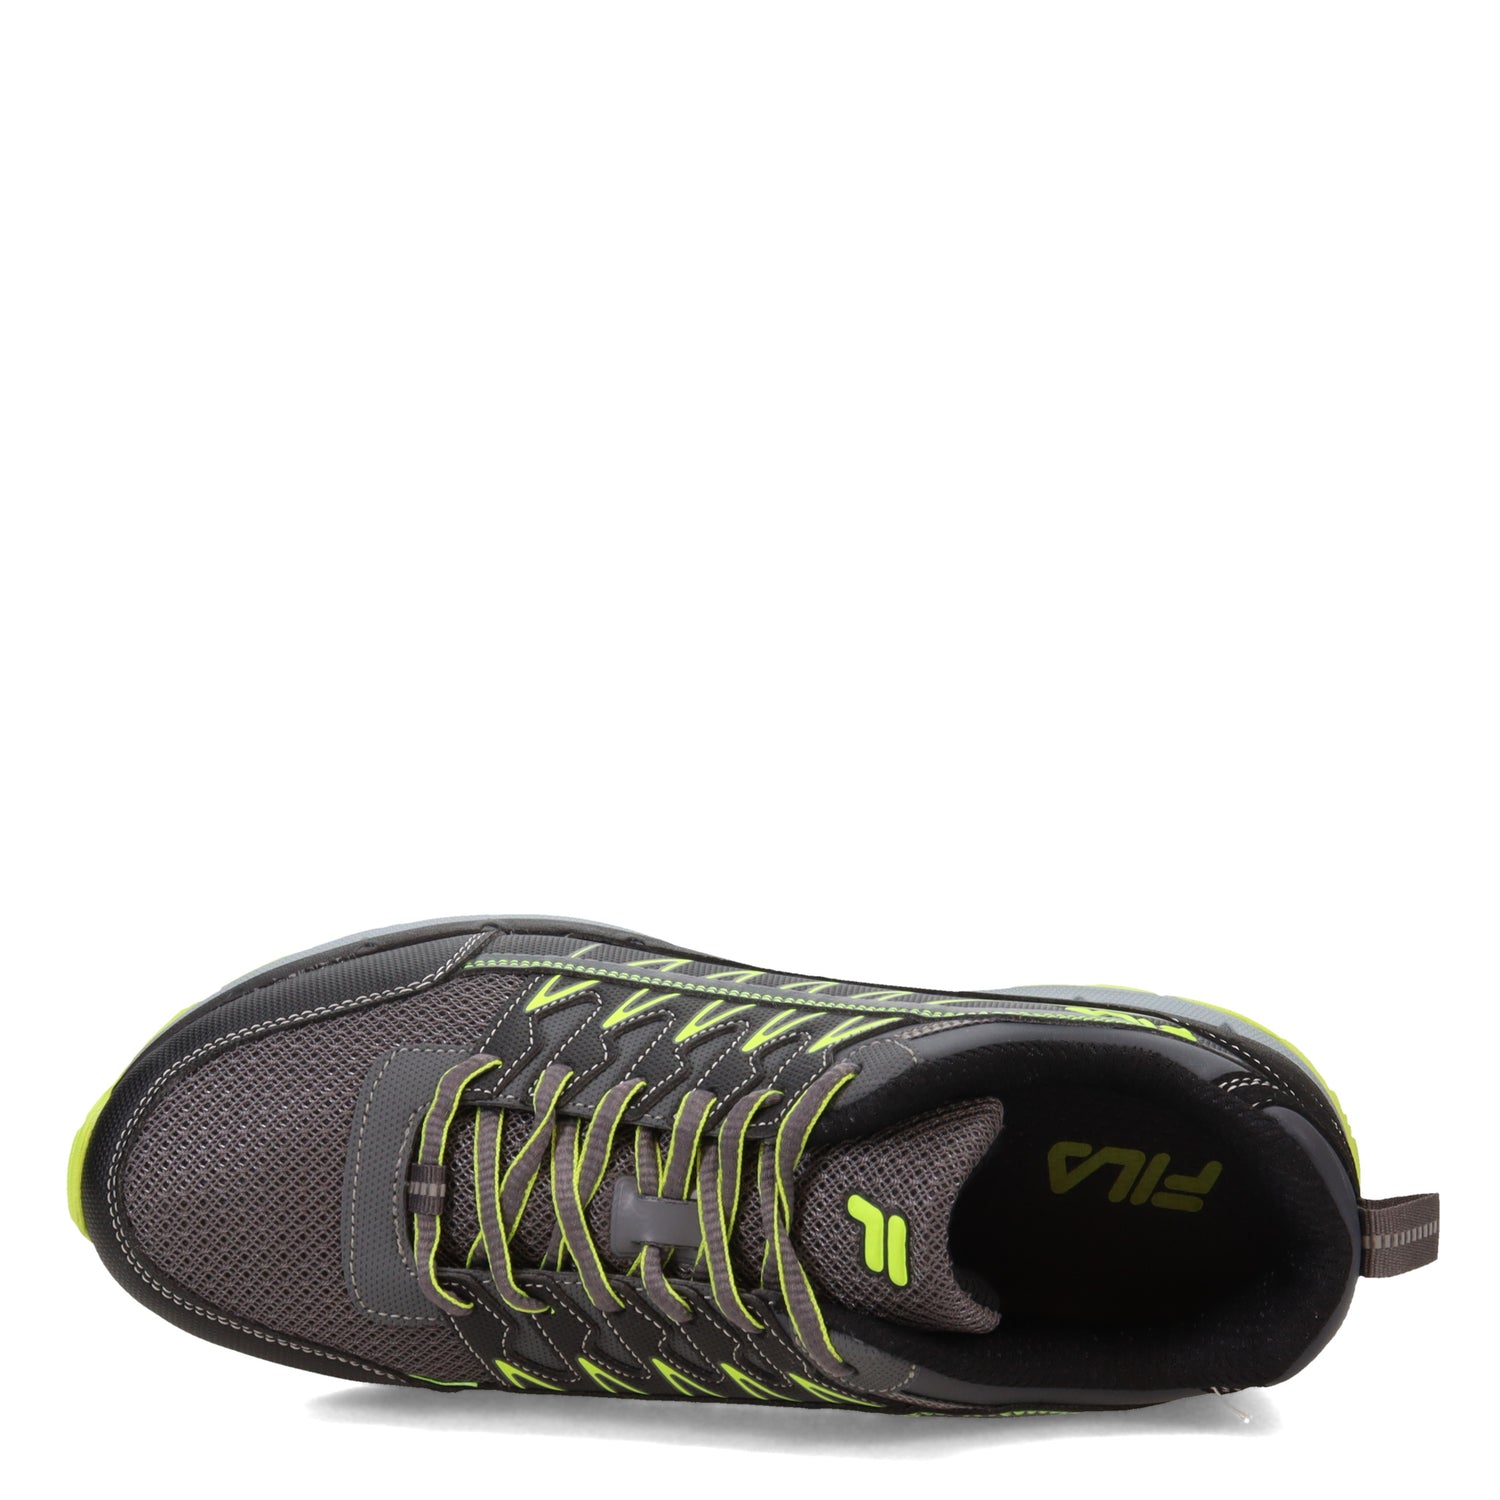 Peltz Shoes  Men's Fila Evergrand TR 21.5 Trail Running Shoe DARK SHADOW 1JM01574-056